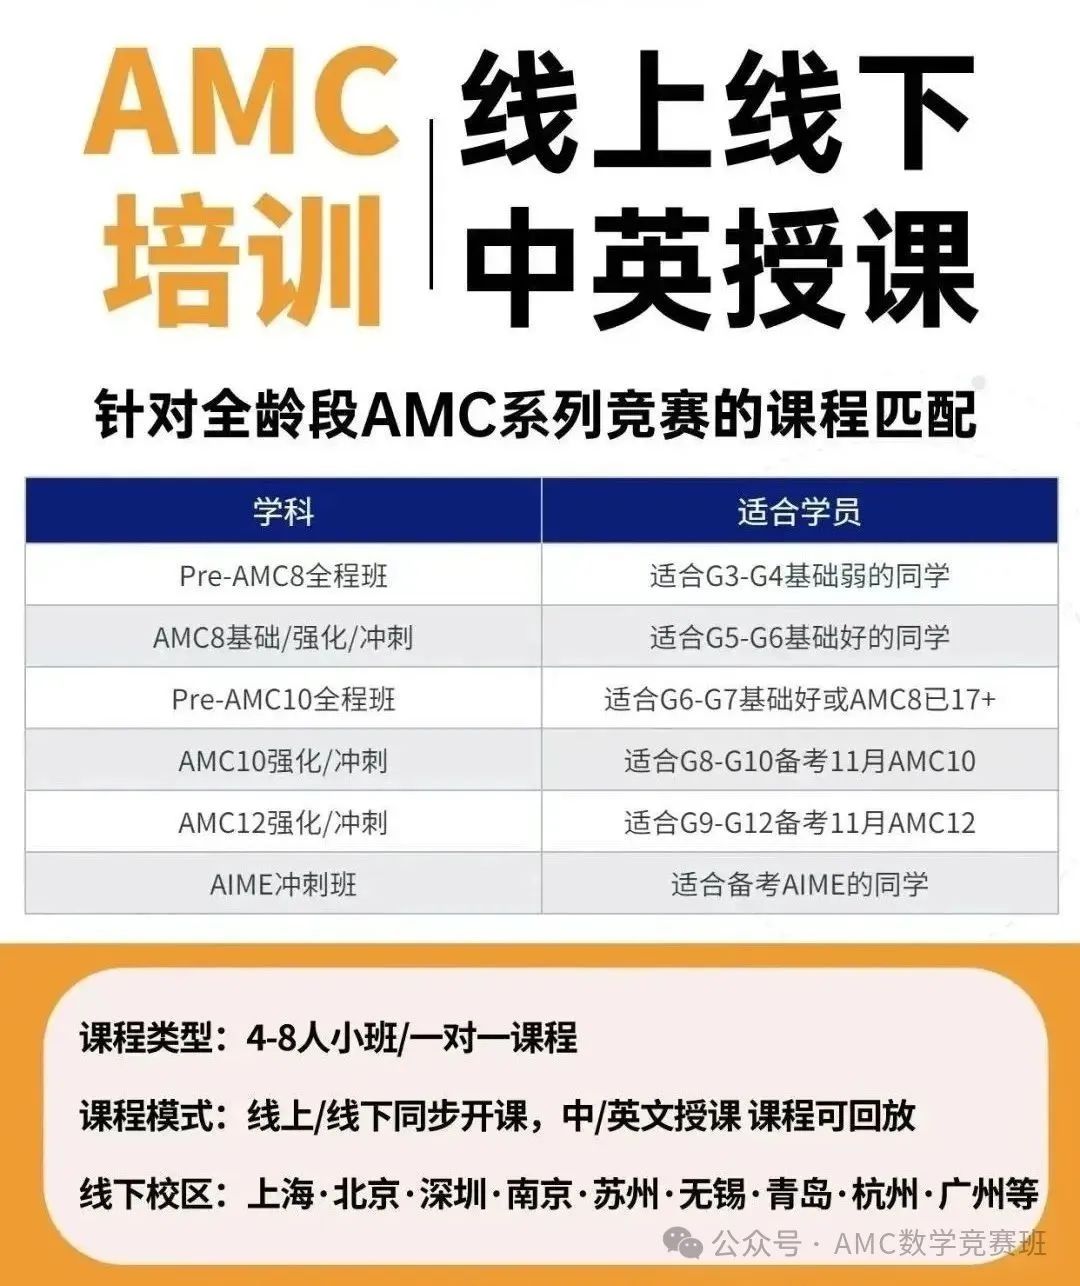 AMC10竞赛AB卷有什么区别？没有竞赛基础可以参加amc10竞赛吗？amc10竞赛暑假培训课程报名咨询！